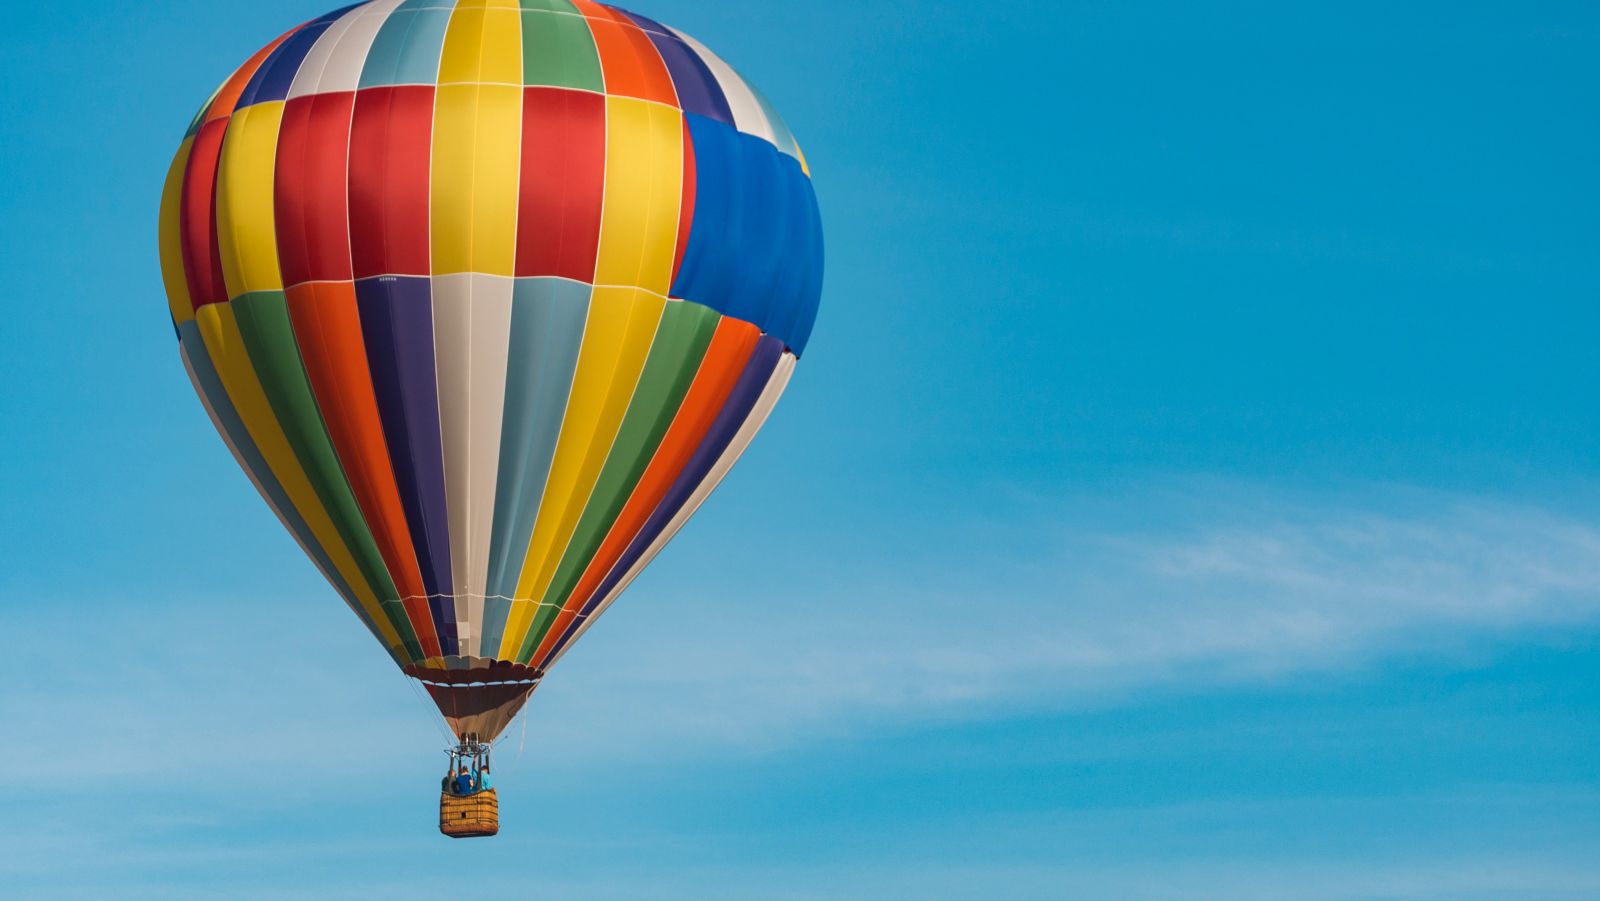 Rhythm Lonavala - a hot air balloon floating in the sky